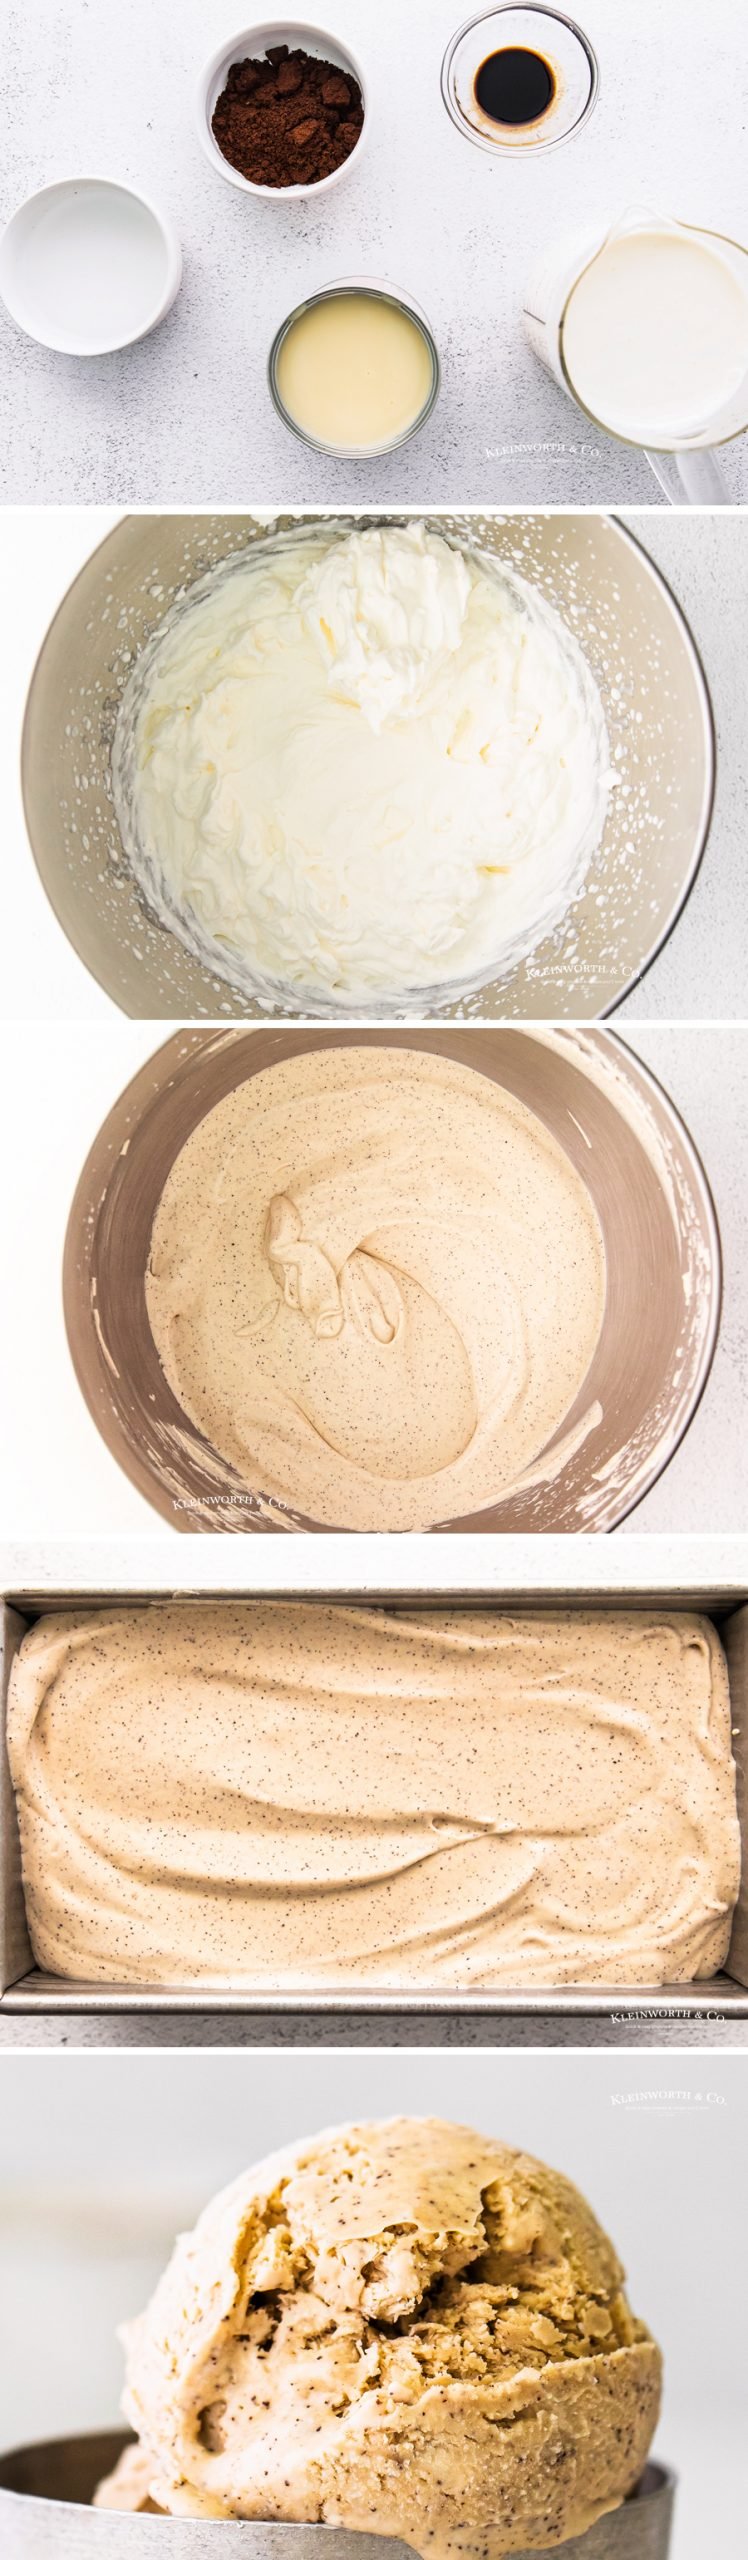 how to make No-Churn Coffee Ice Cream Recipe